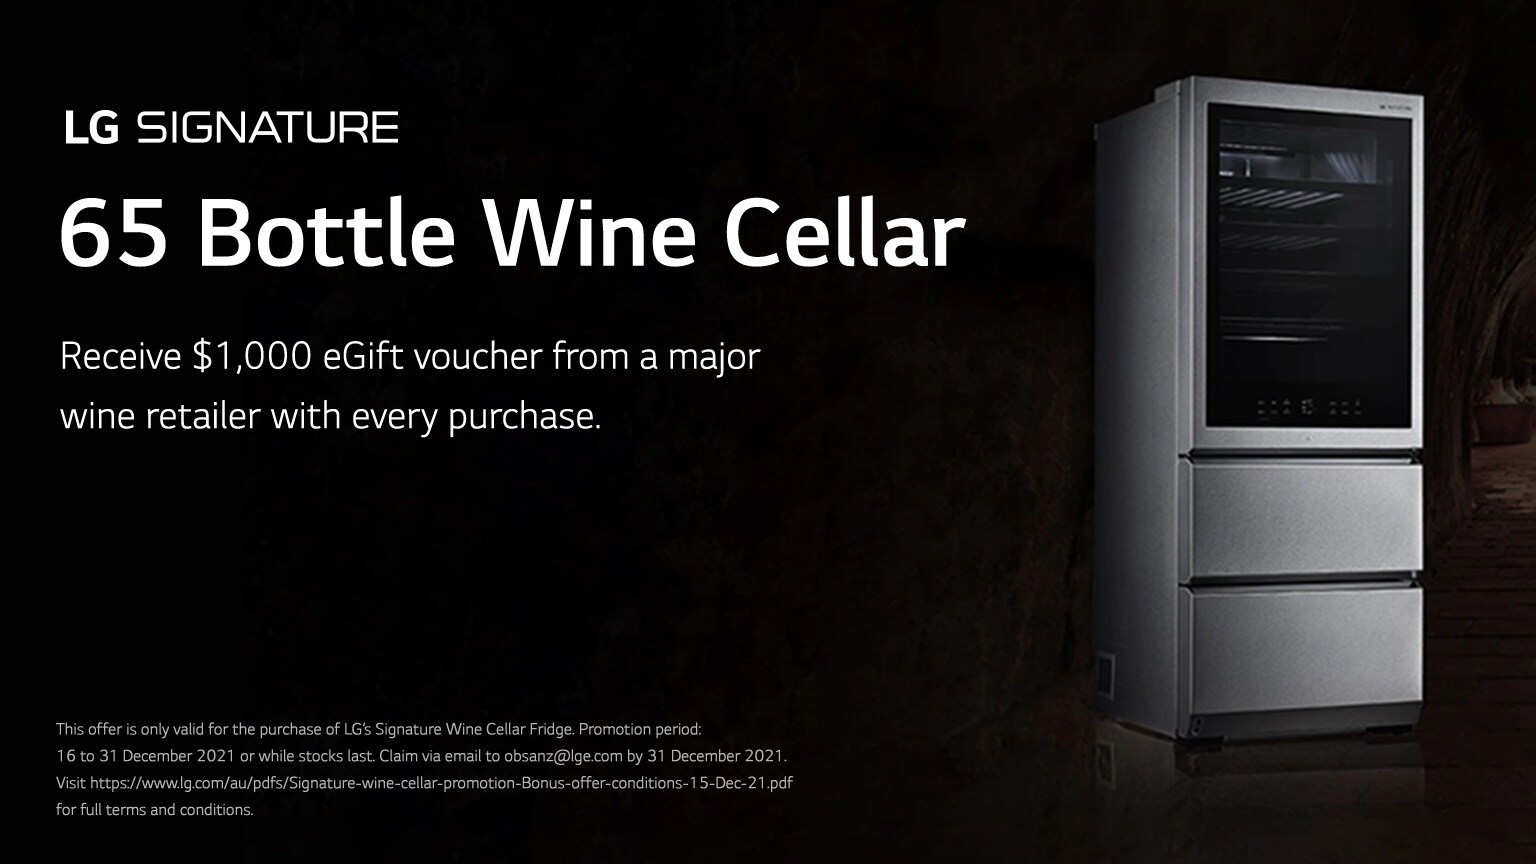 Receive $1000 eGift voucher when you purchase a LG's Signature Wine Cellar Fridge